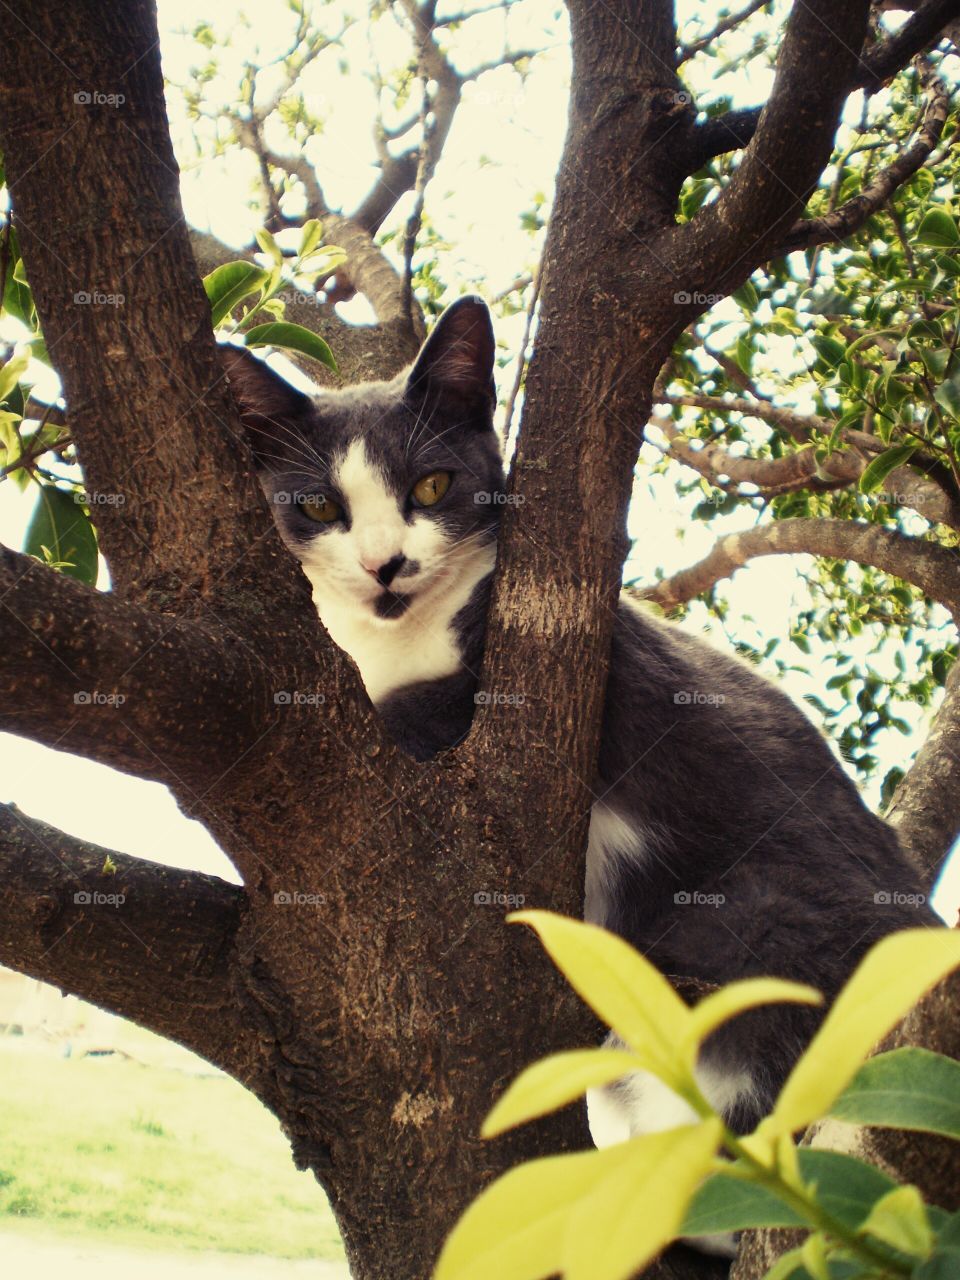 cat in.the tree